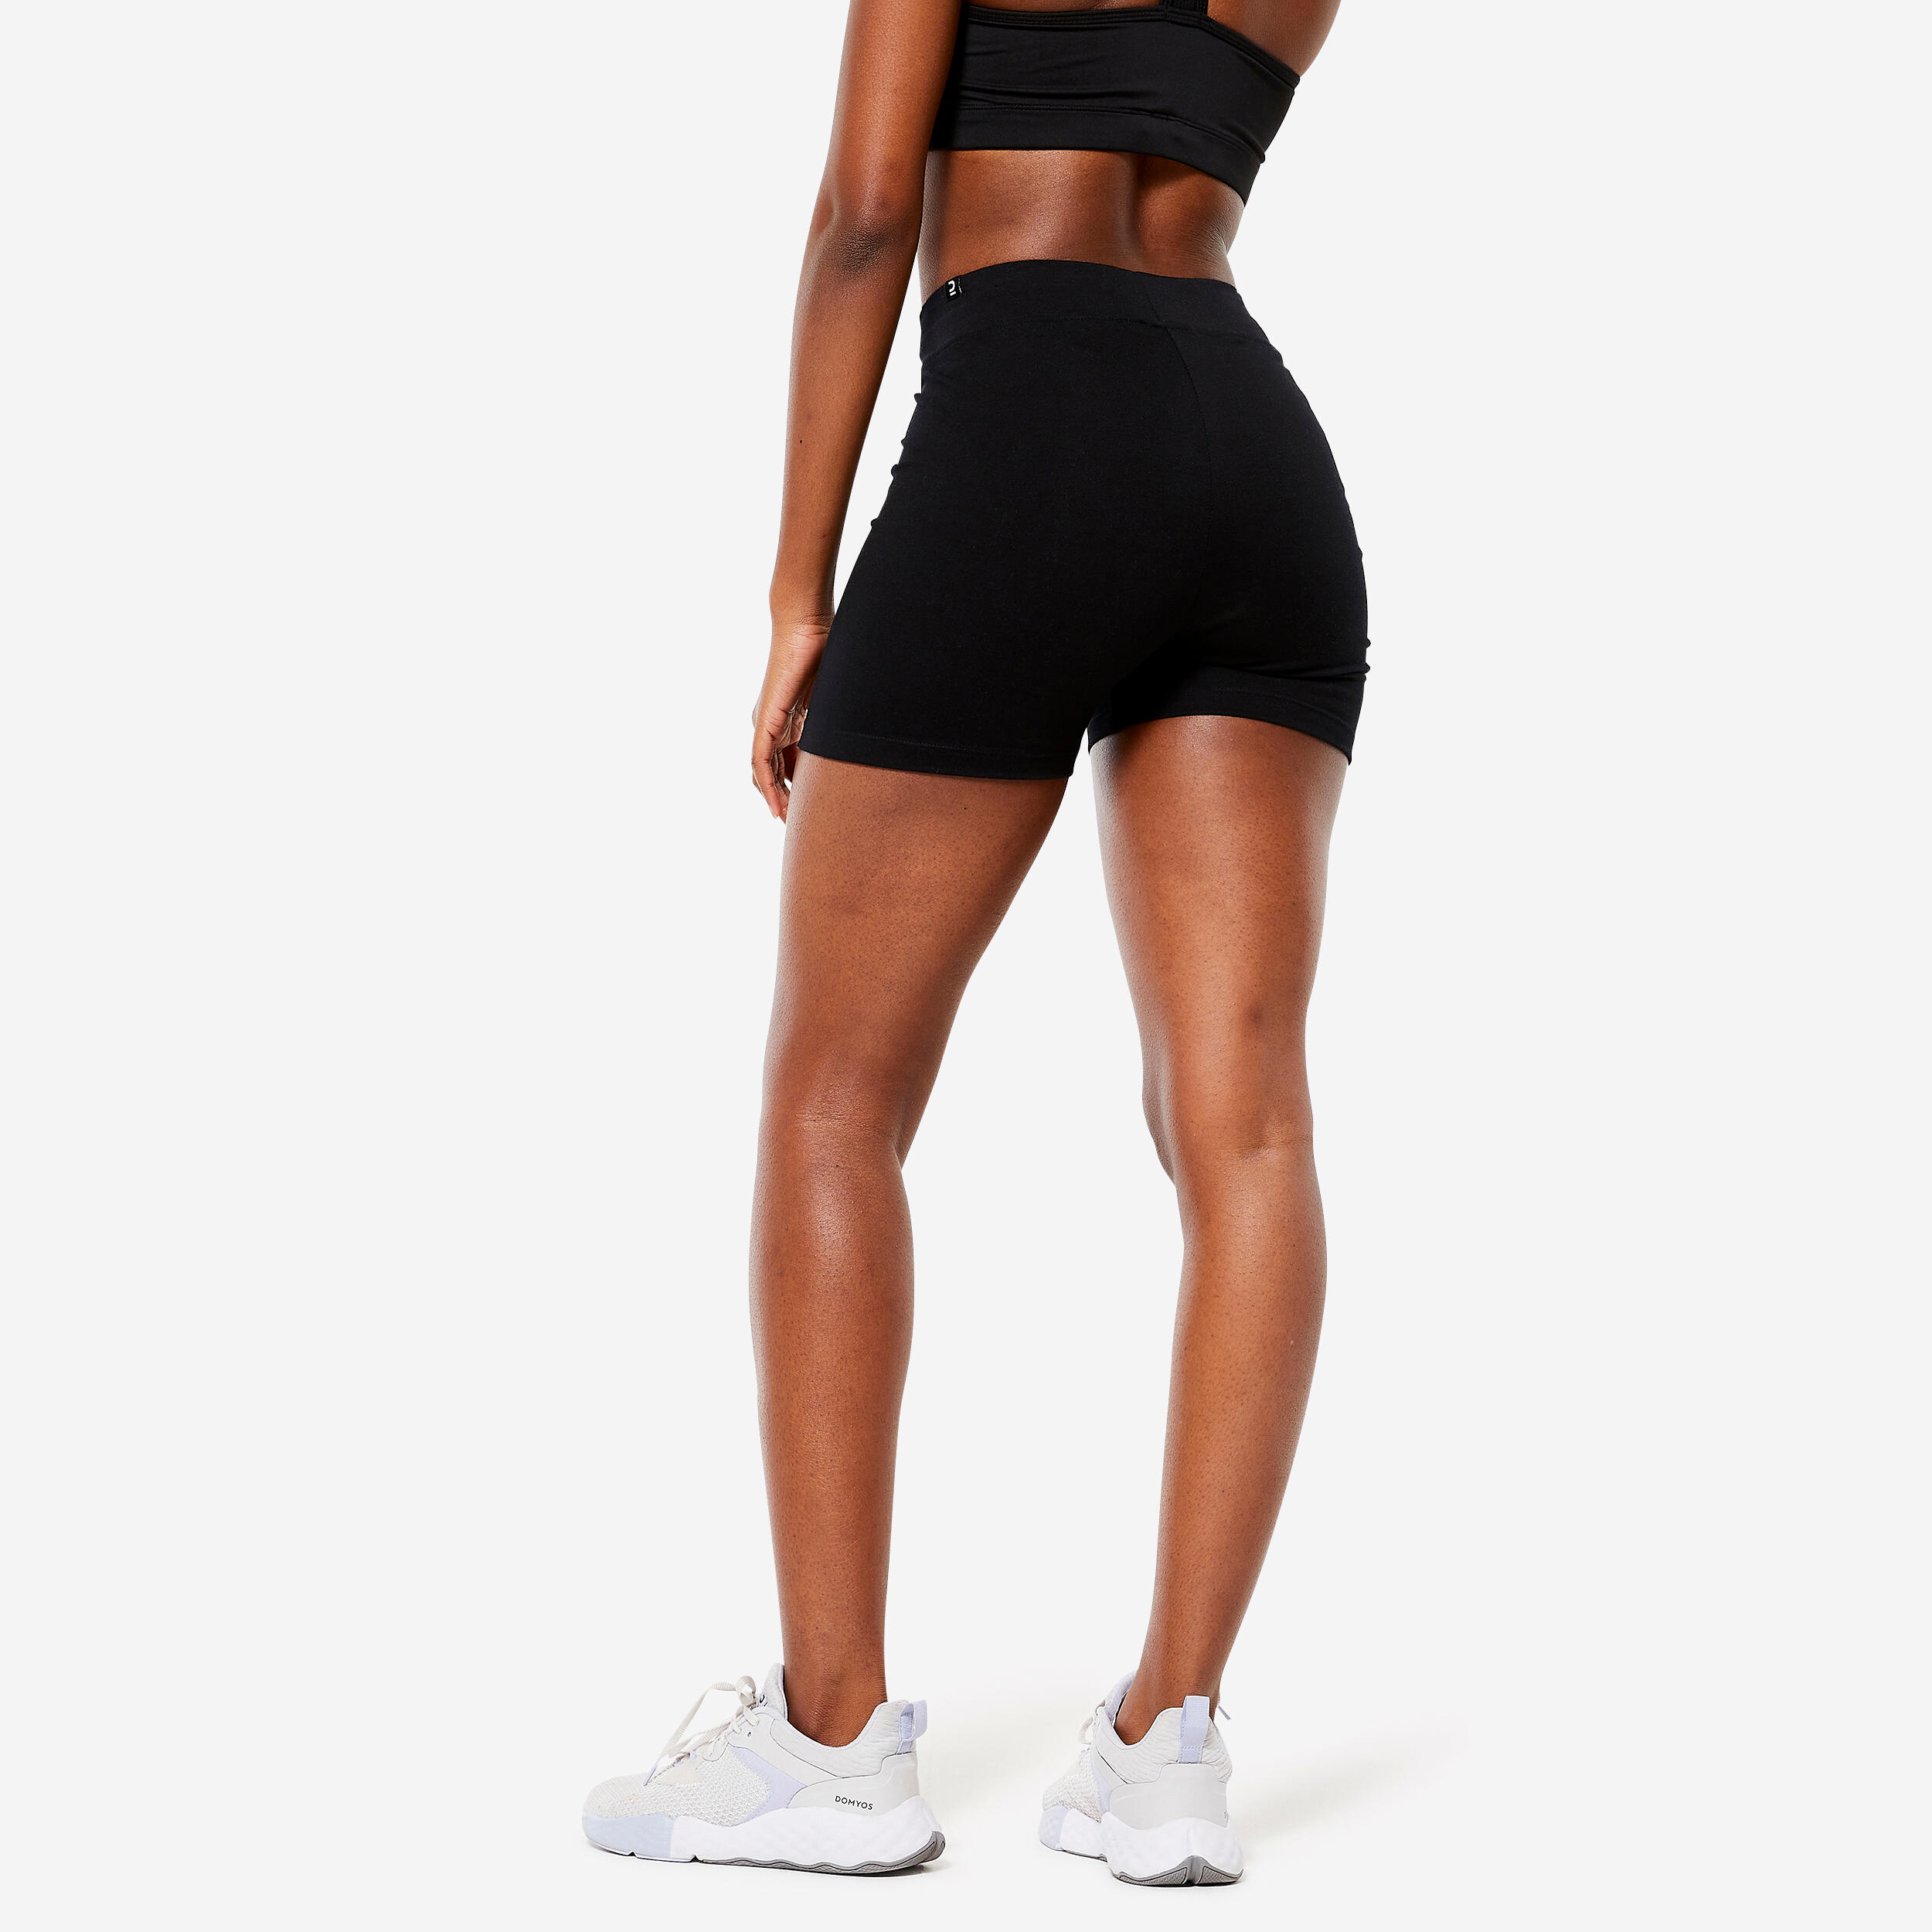 Women's Fitness Slim-Fit Shorts 500 - Black 4/5